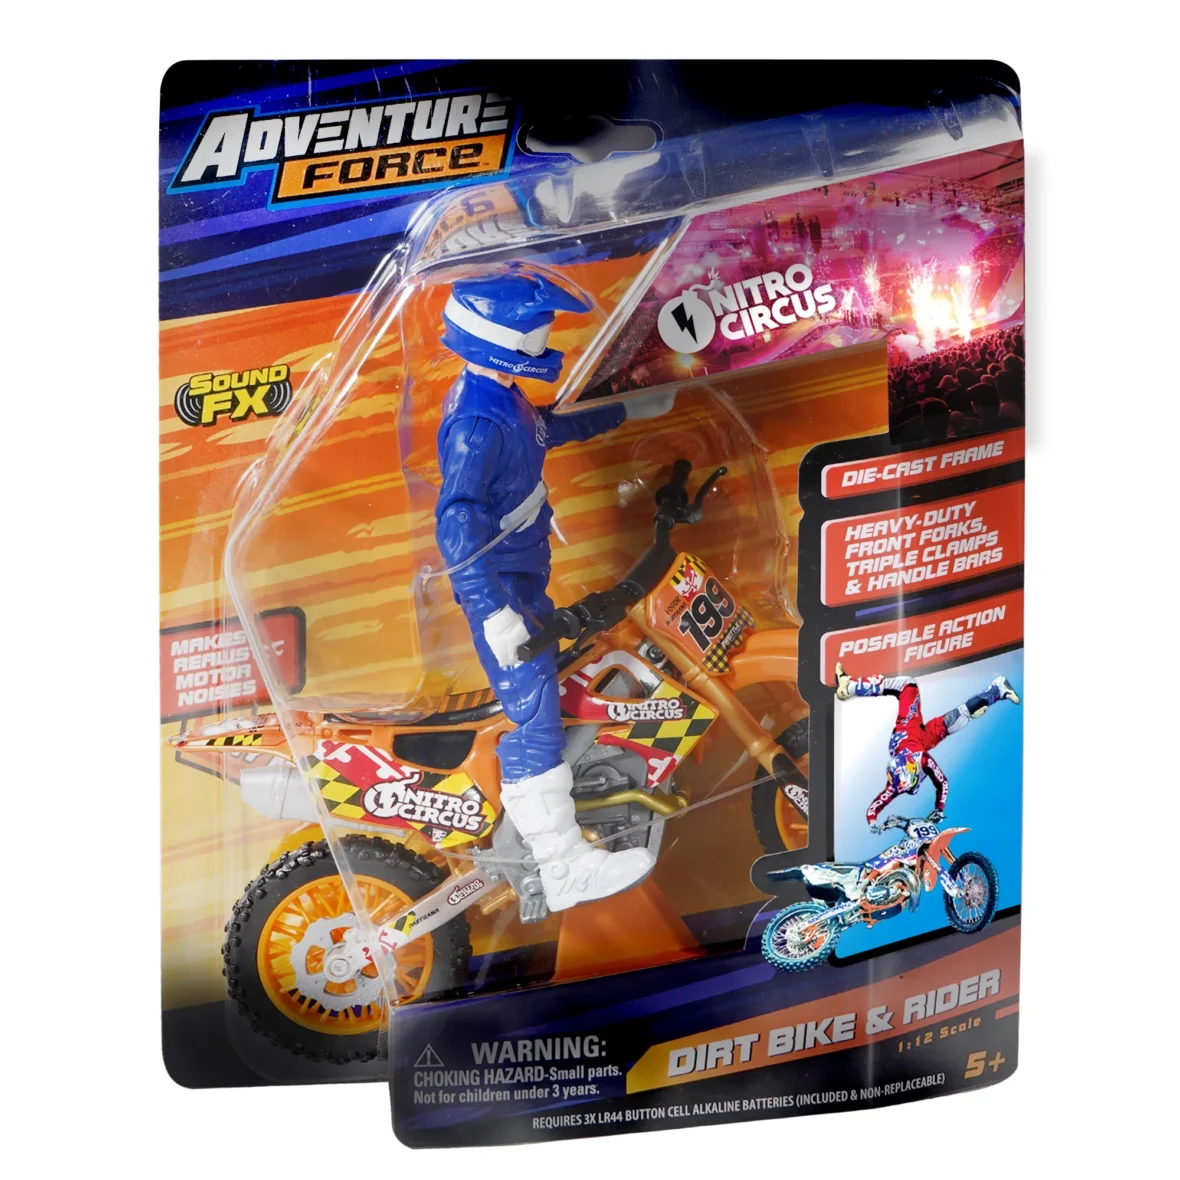 Adventure Force Nitro Circus Dirt Bike with Rider Toy, 1.12 Replica, Nitro Orange